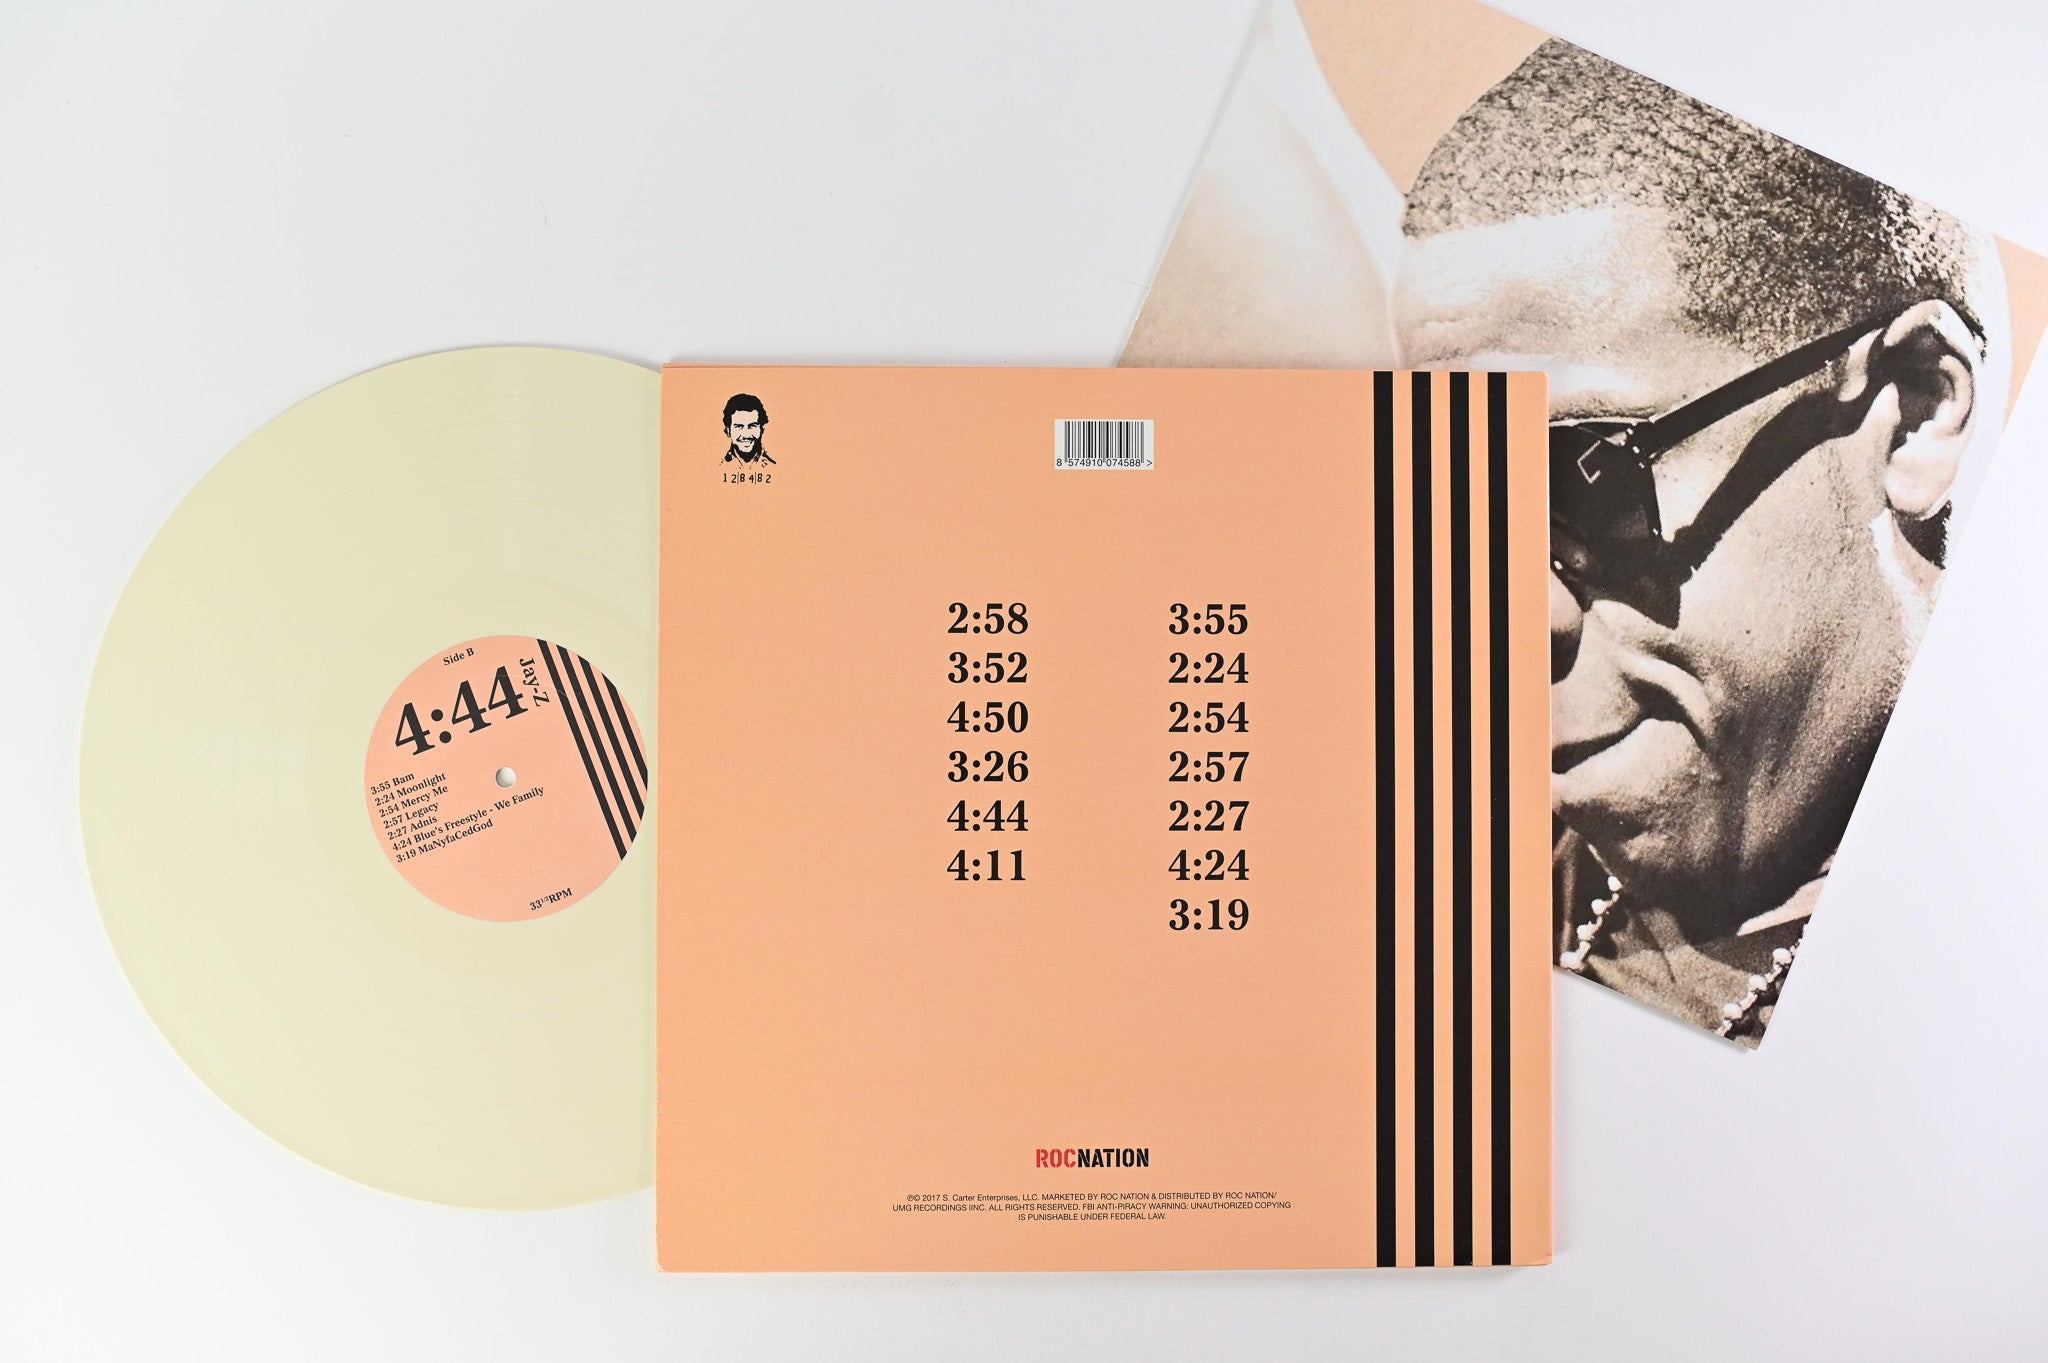 Jay-Z - 4:44 Unofficial Release White Vinyl